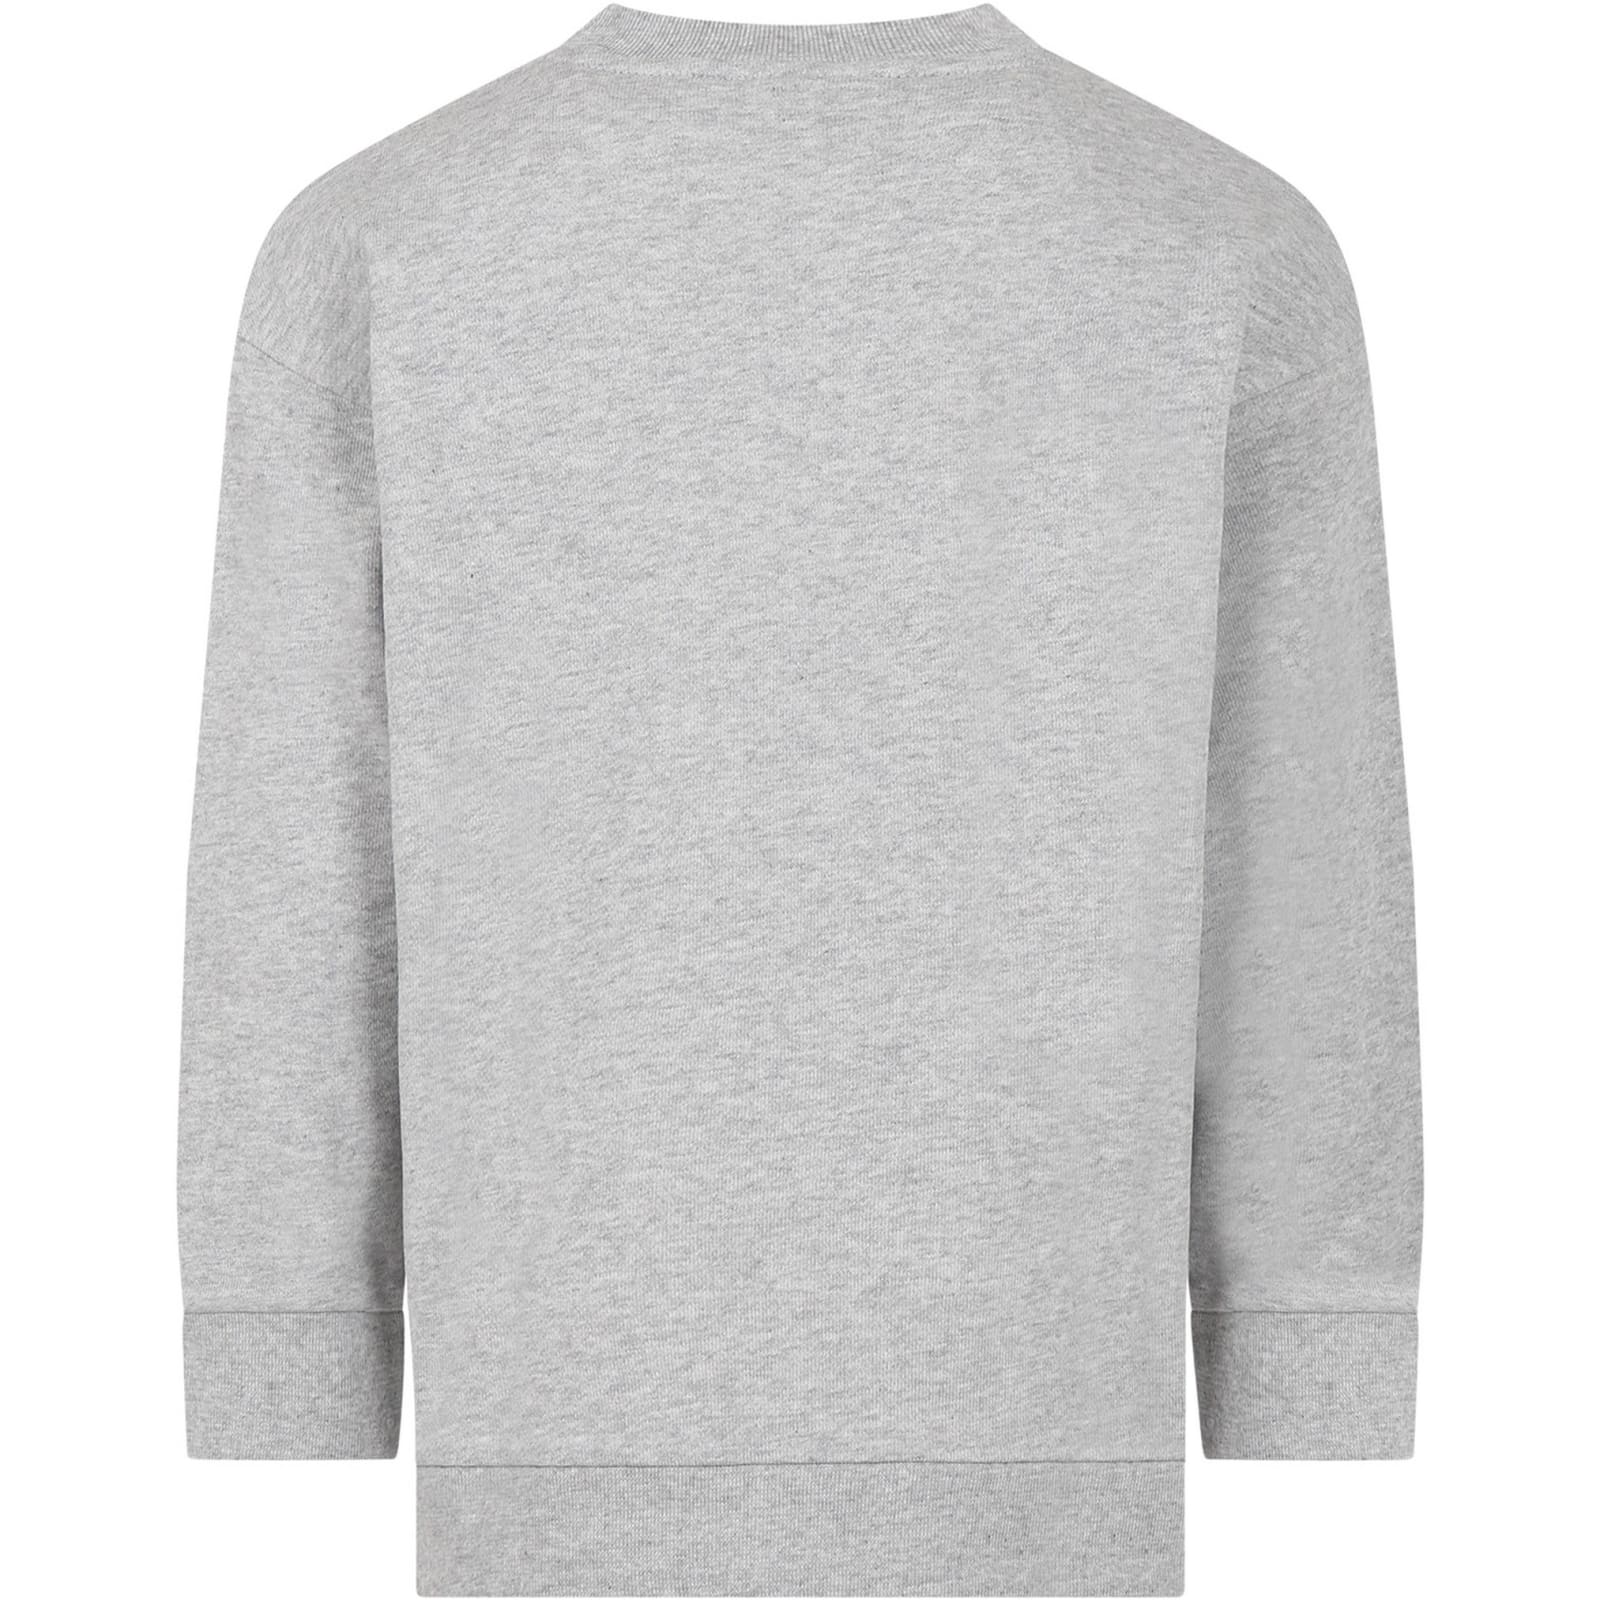 Shop Fendi Grey Sweatshirt For Kids With Logo